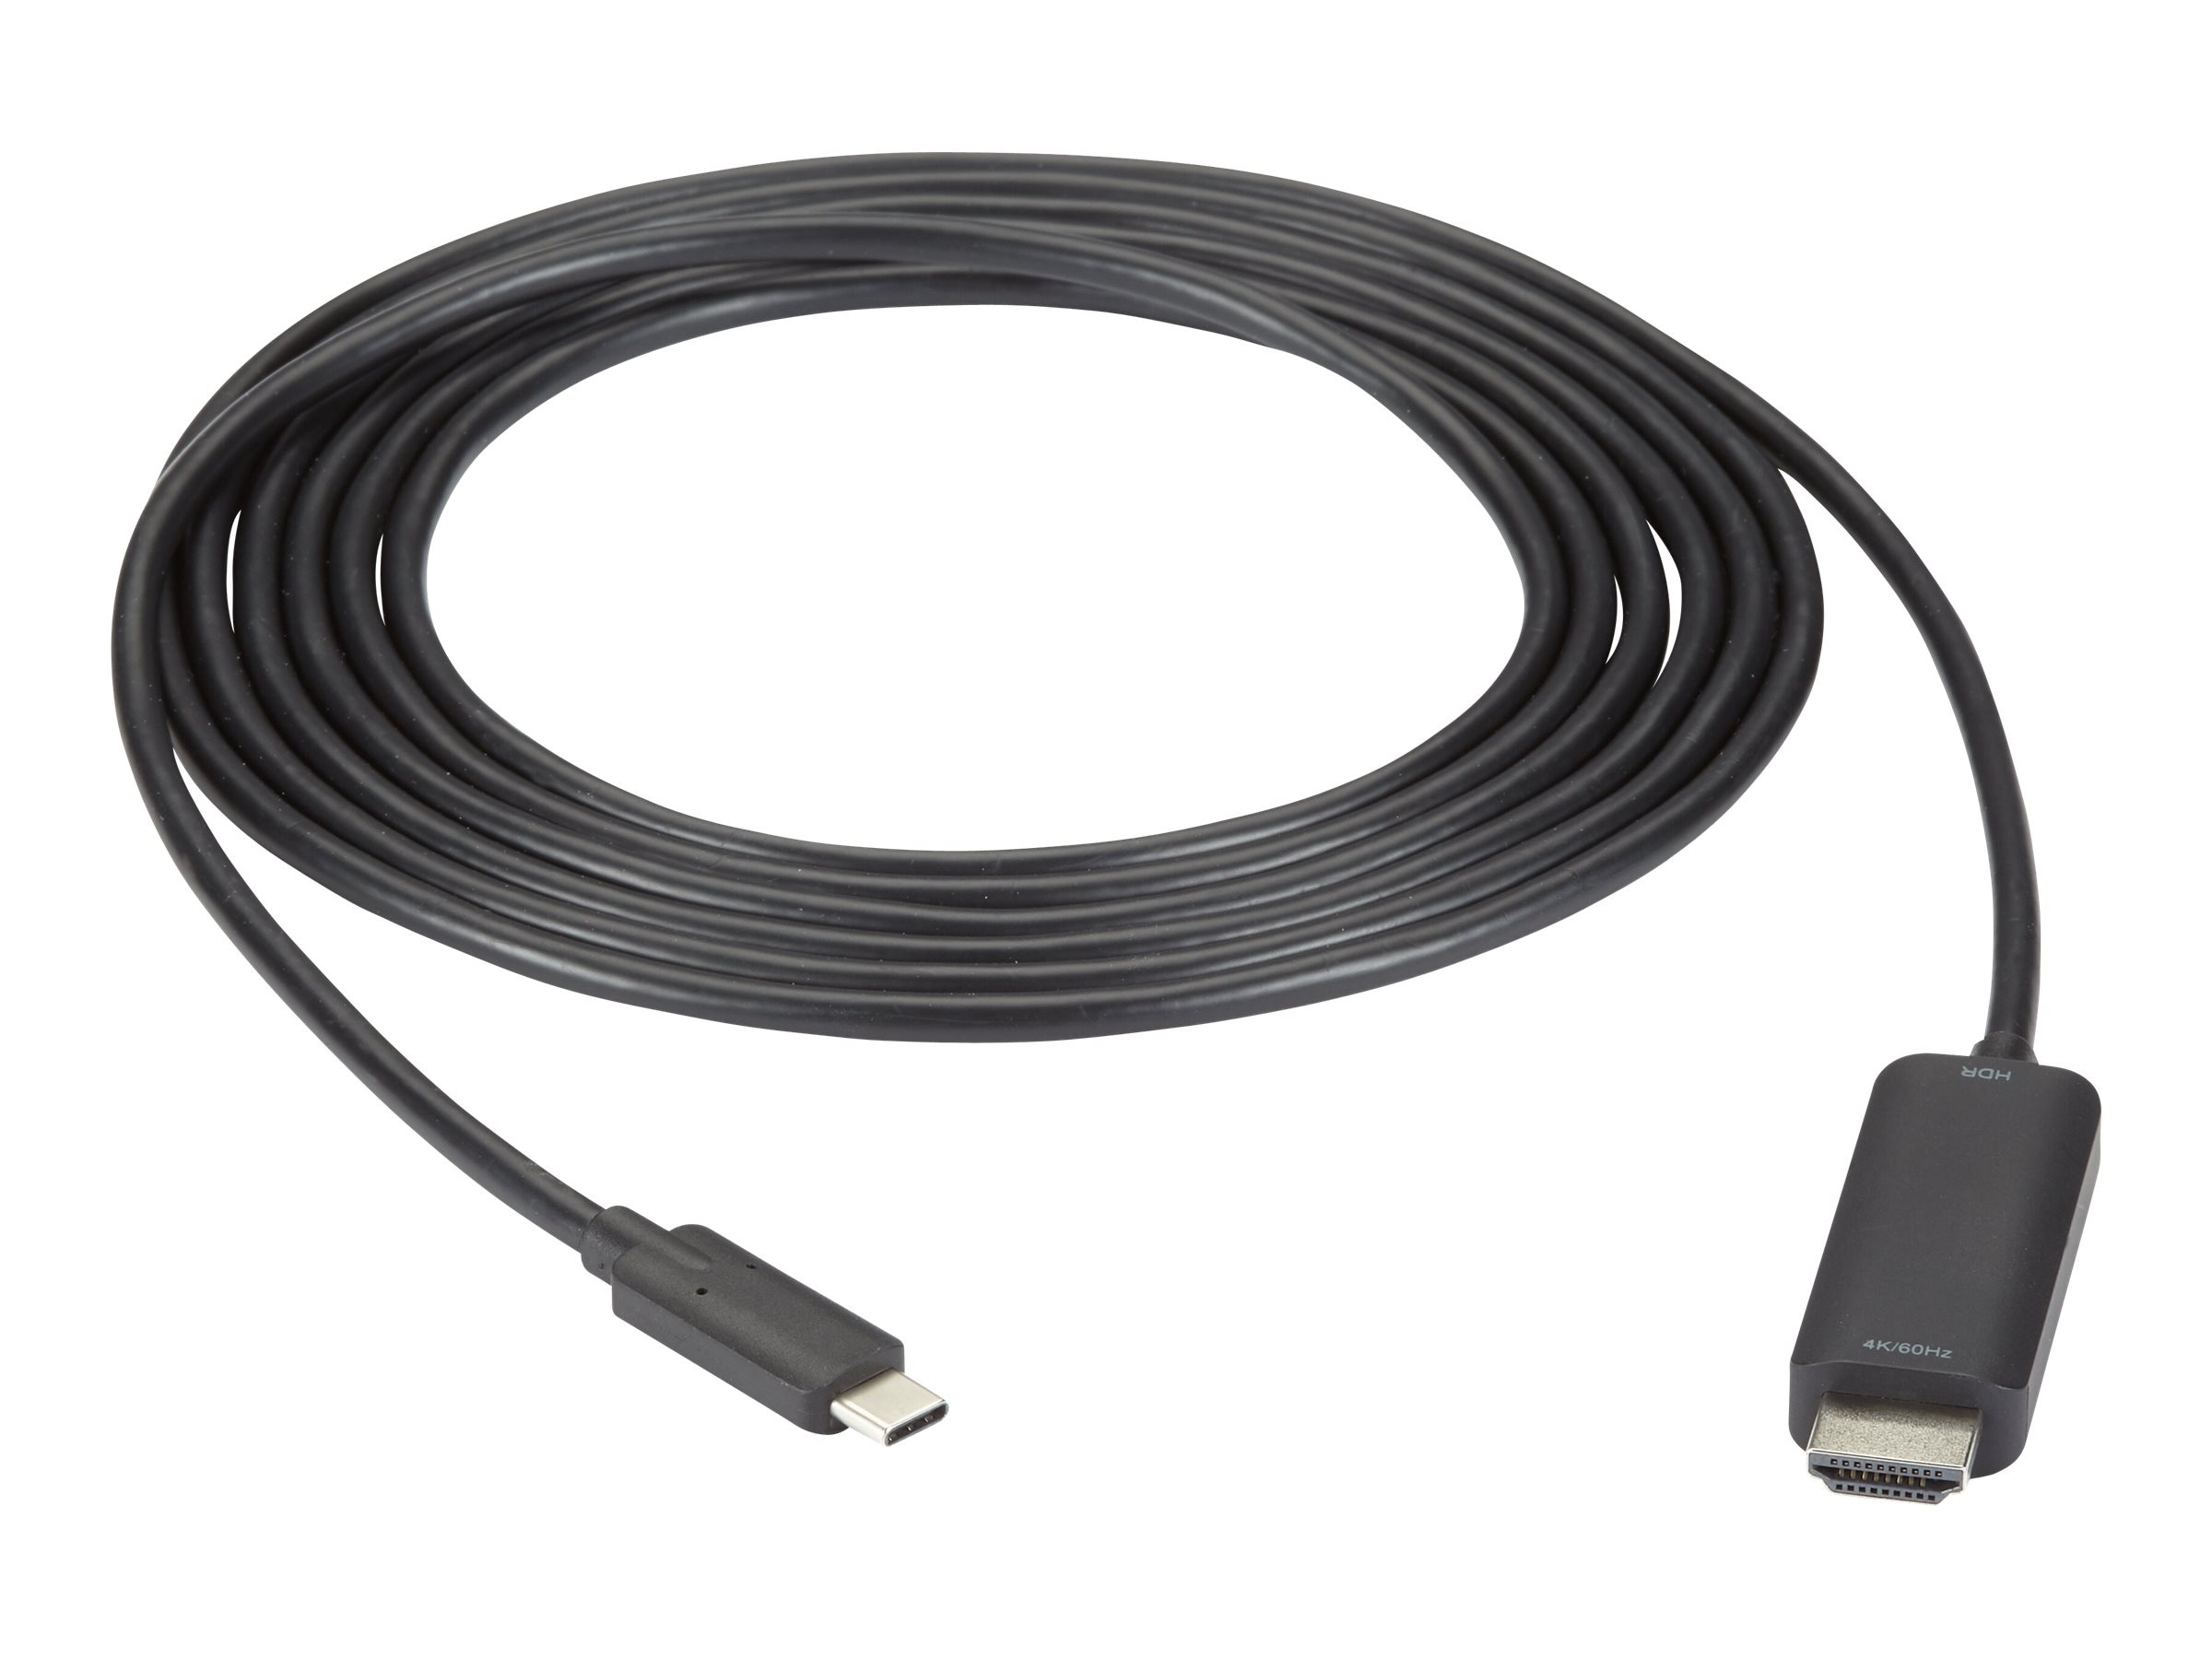 VA-USBC31-HDR4K-003, USB-C Adapter Cable - USB-C to HDMI 2.0